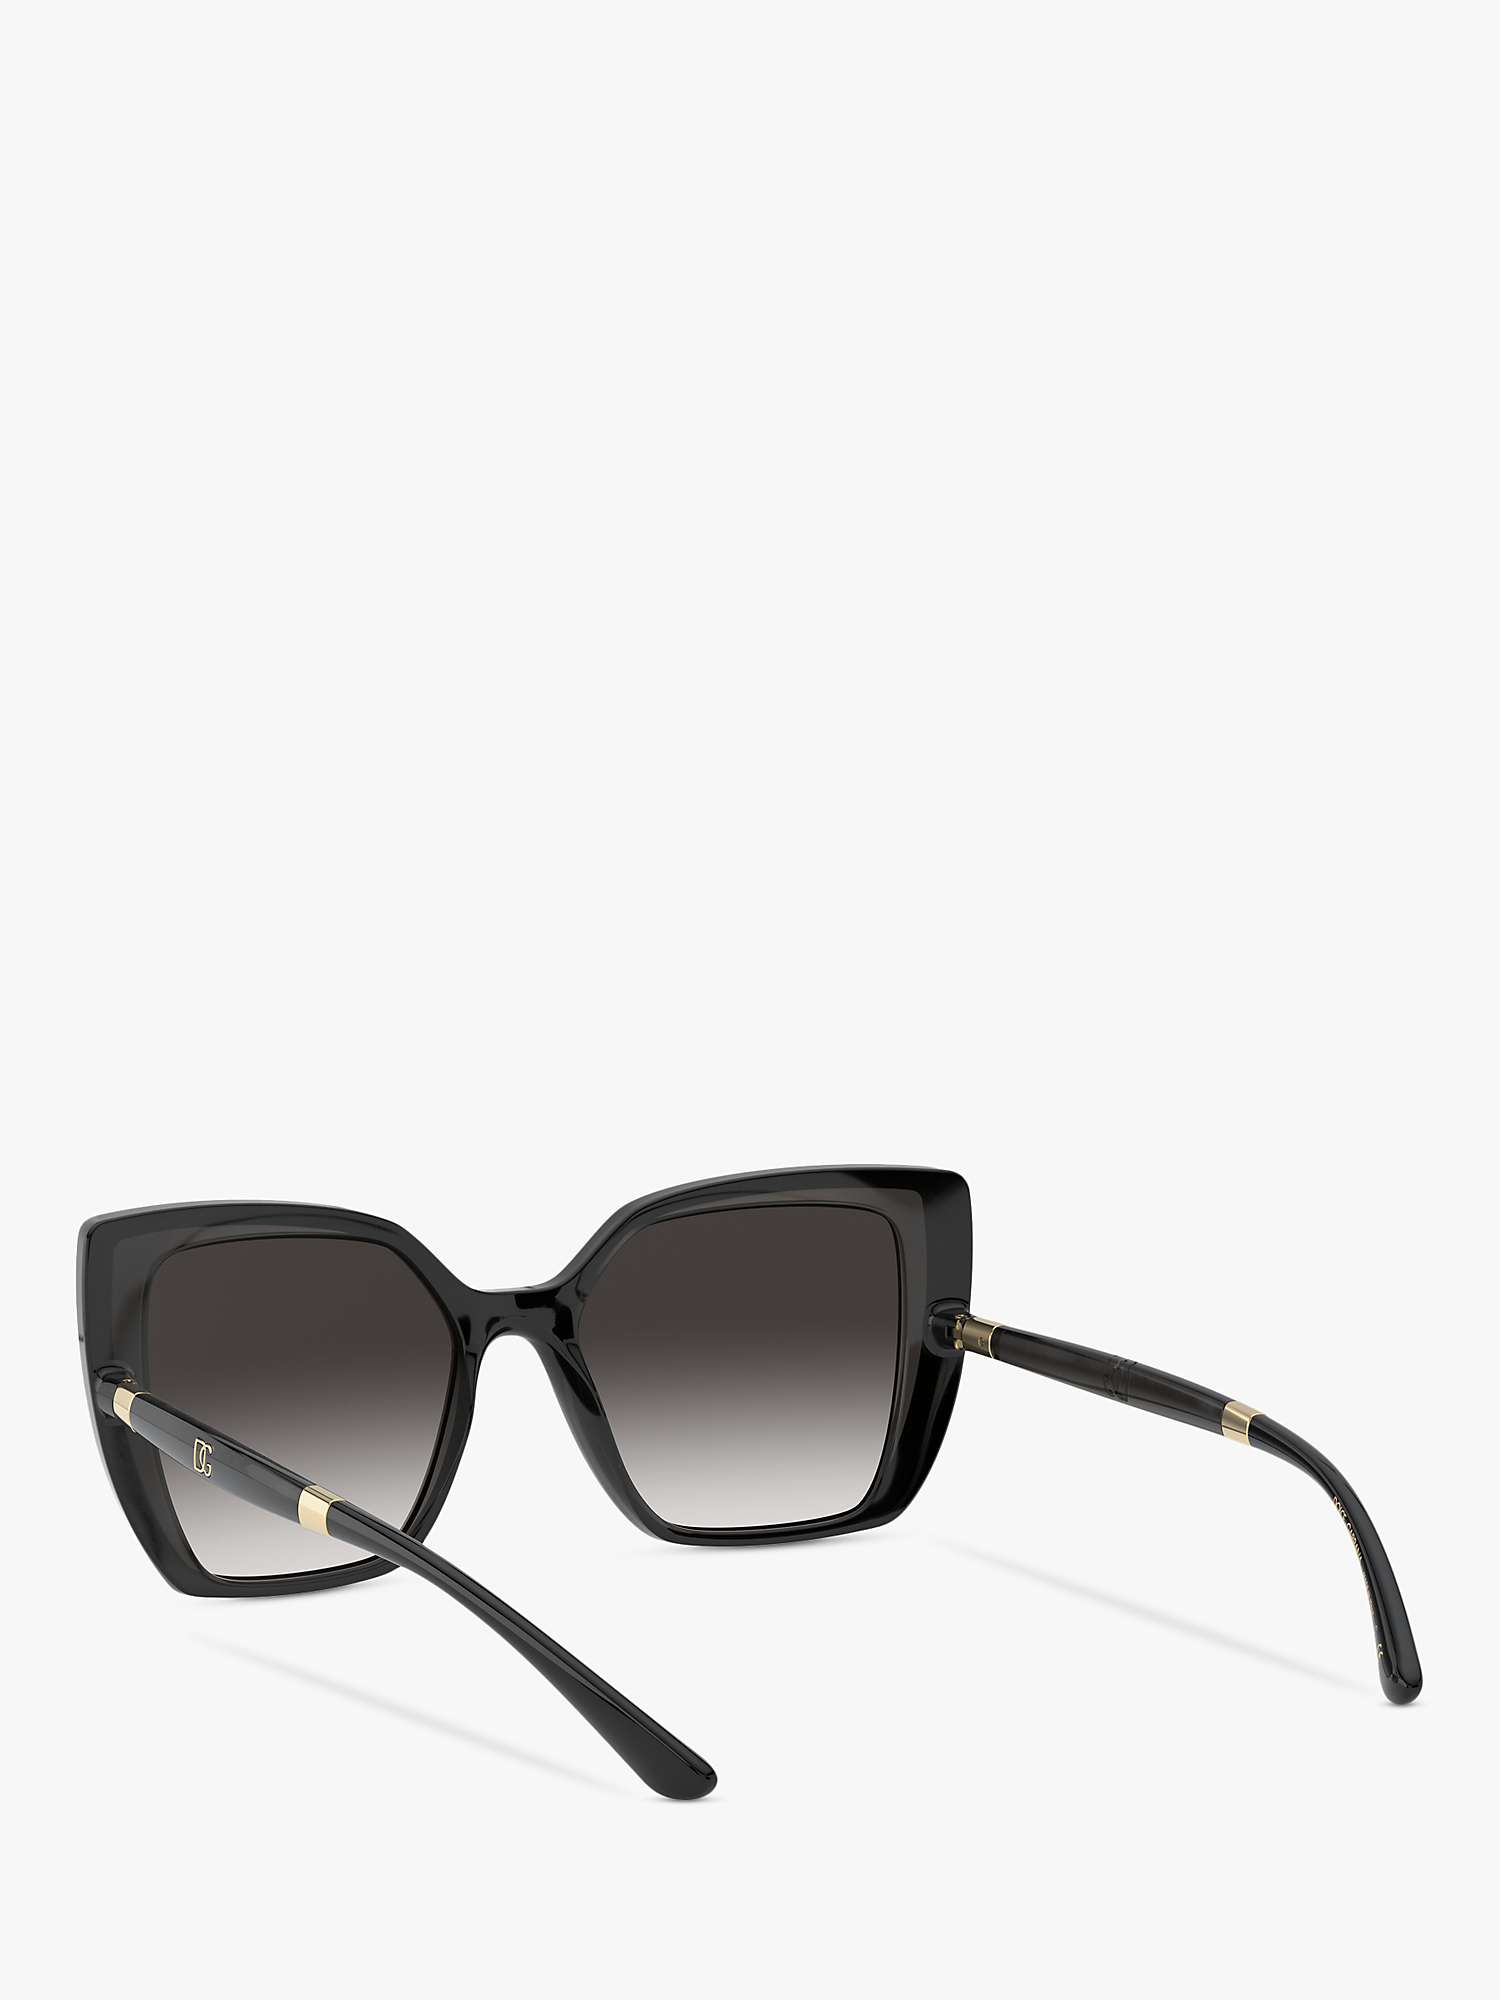 Buy Dolce & Gabbana DG6138 Women's Butterfly Sunglasses Online at johnlewis.com